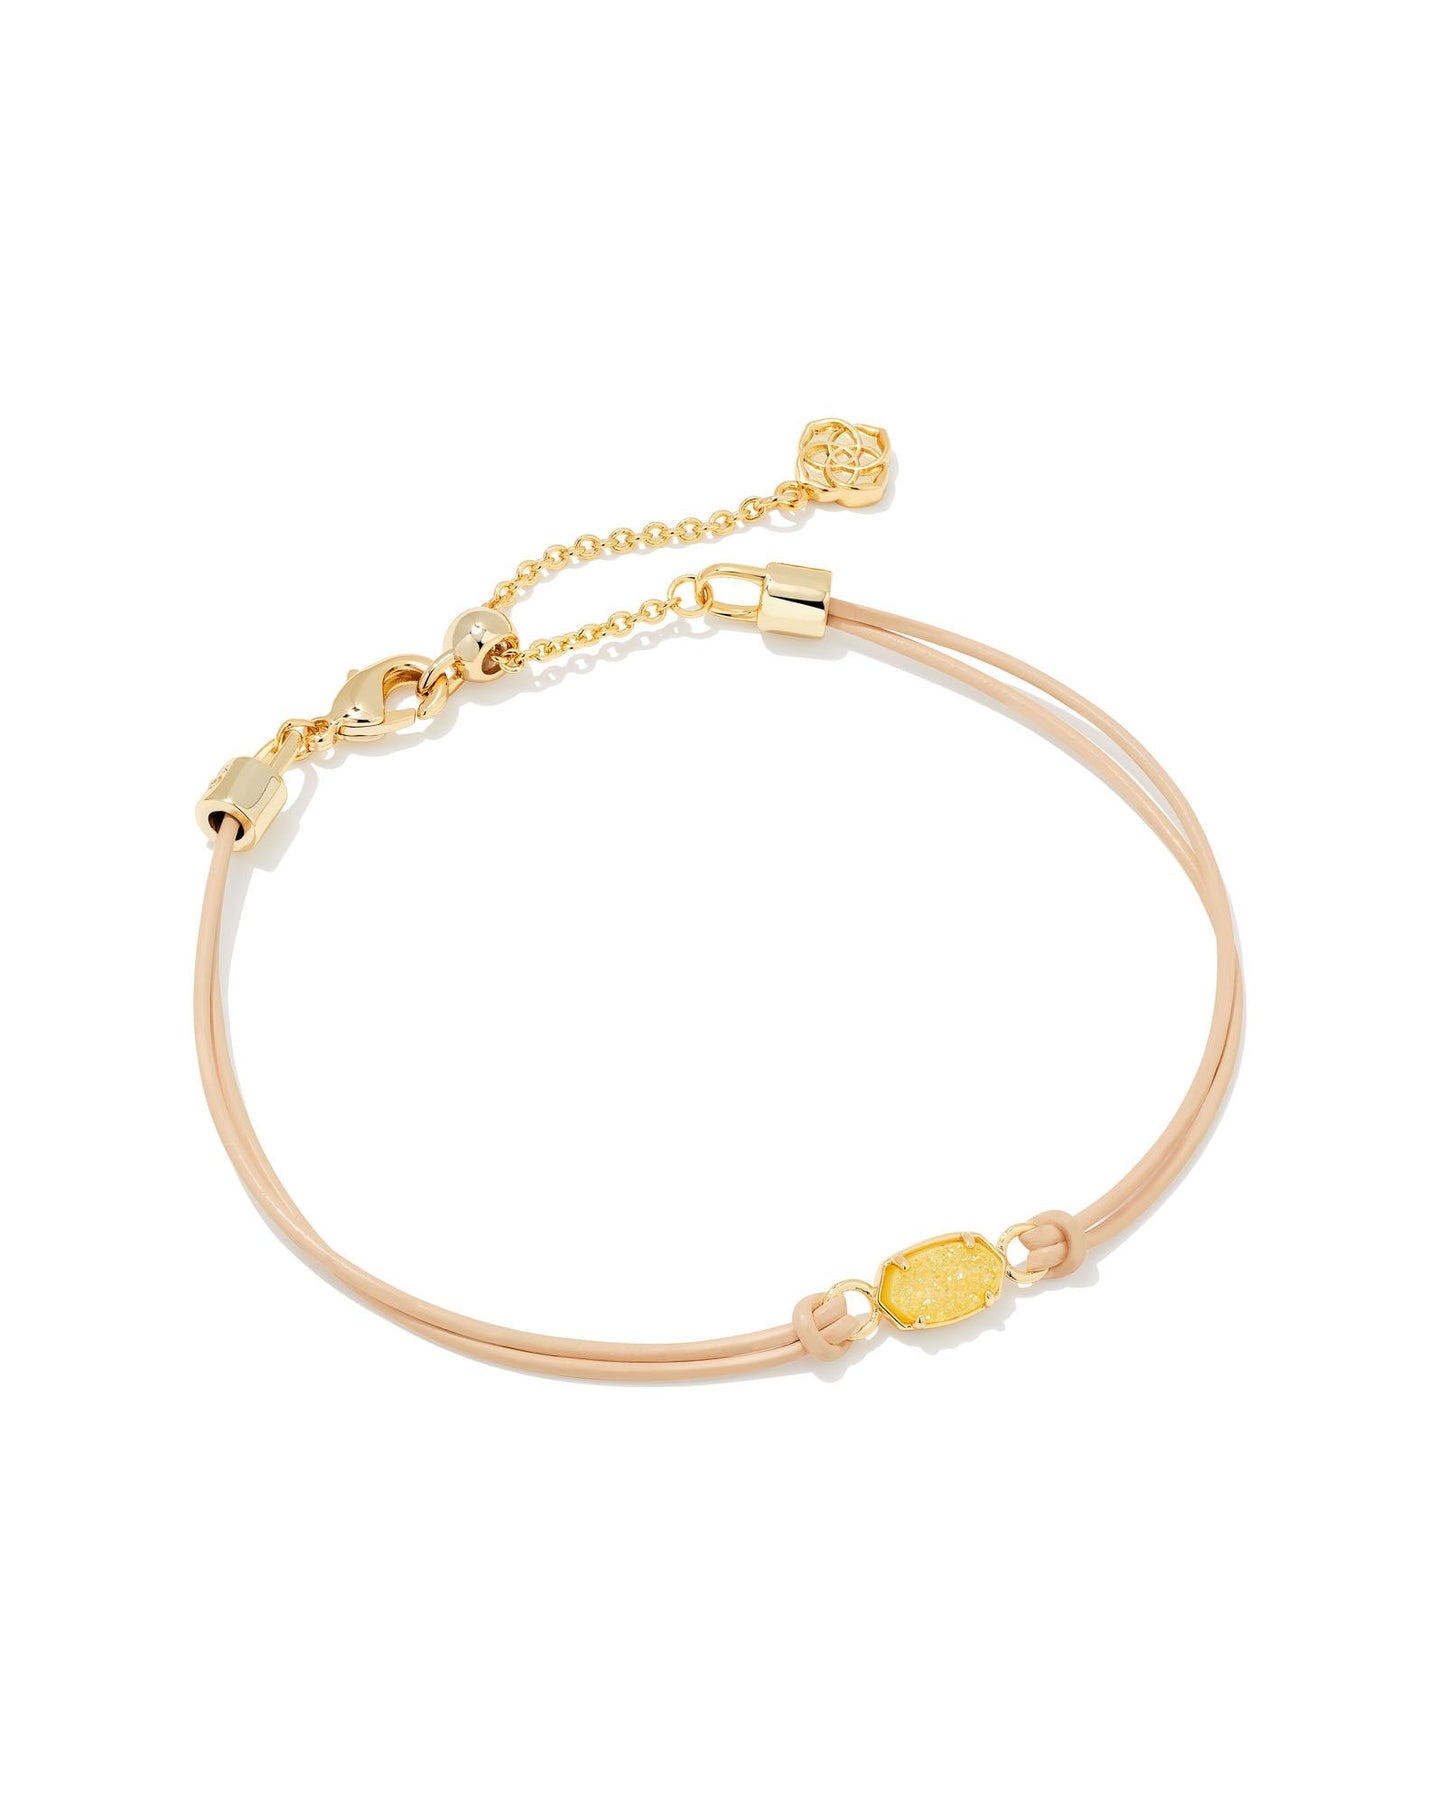 Kendra Scott Emilie Corded Bracelet - Gold Light Yellow Drusy